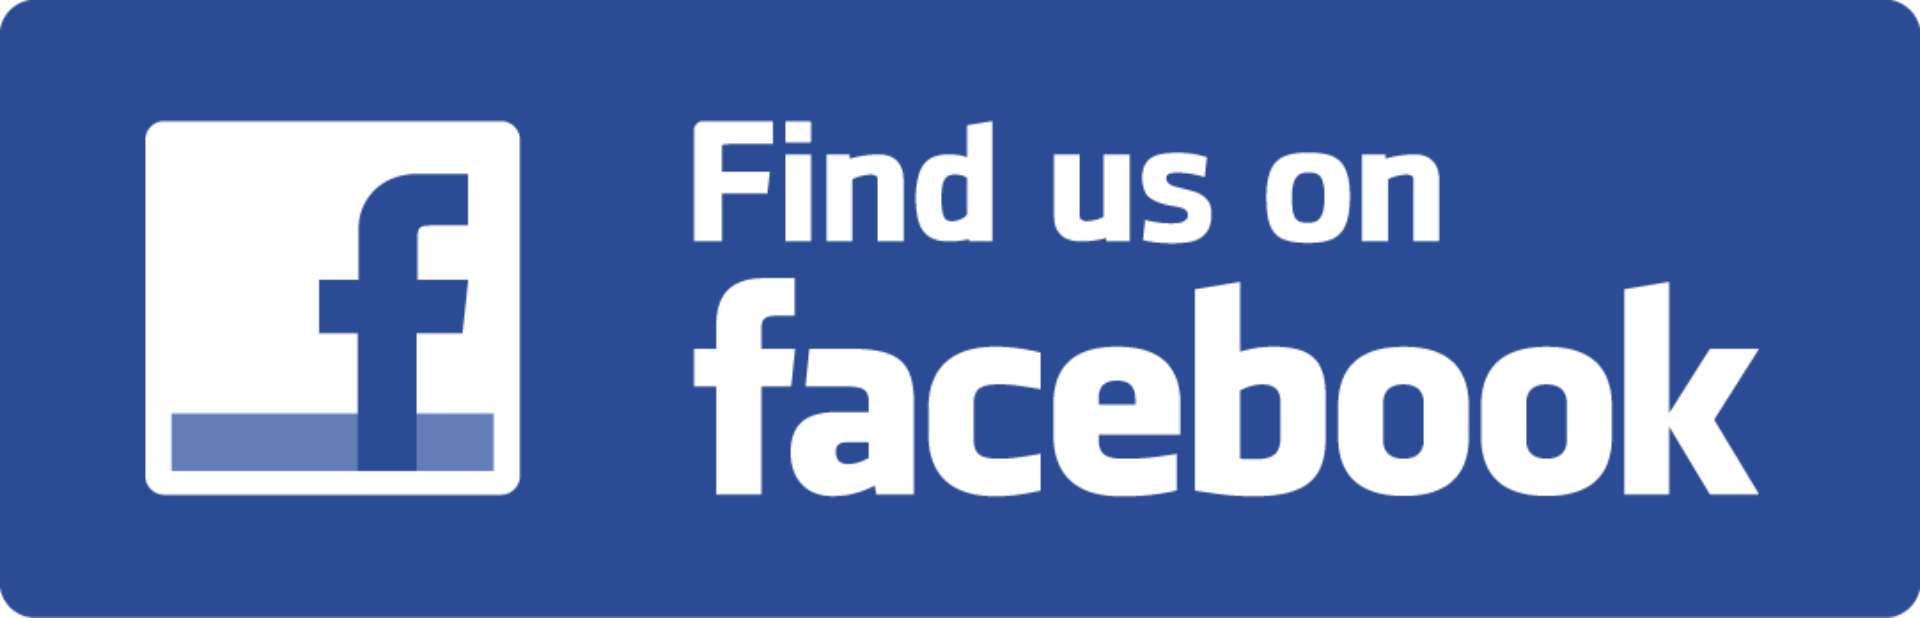 cropped-find-us-on-facebook-logo-vector.png